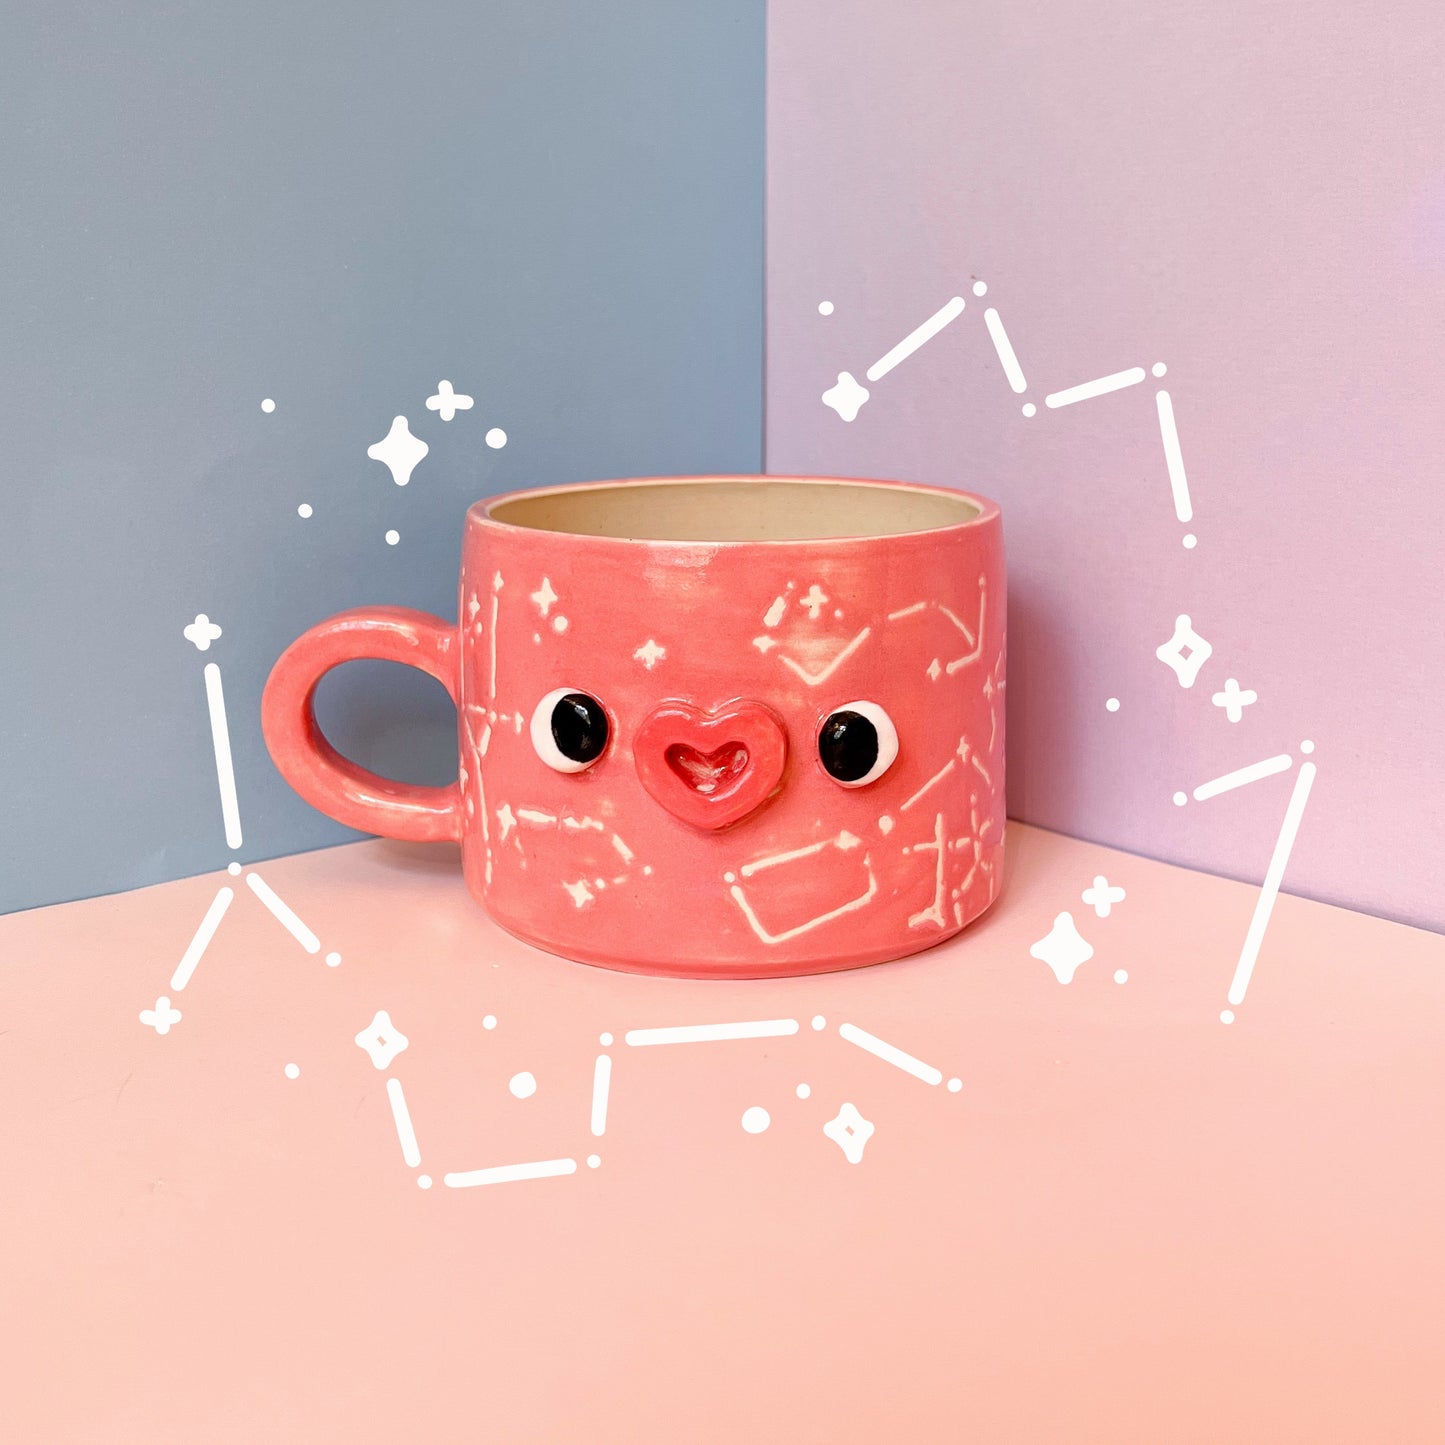 Zodiac constellation mug